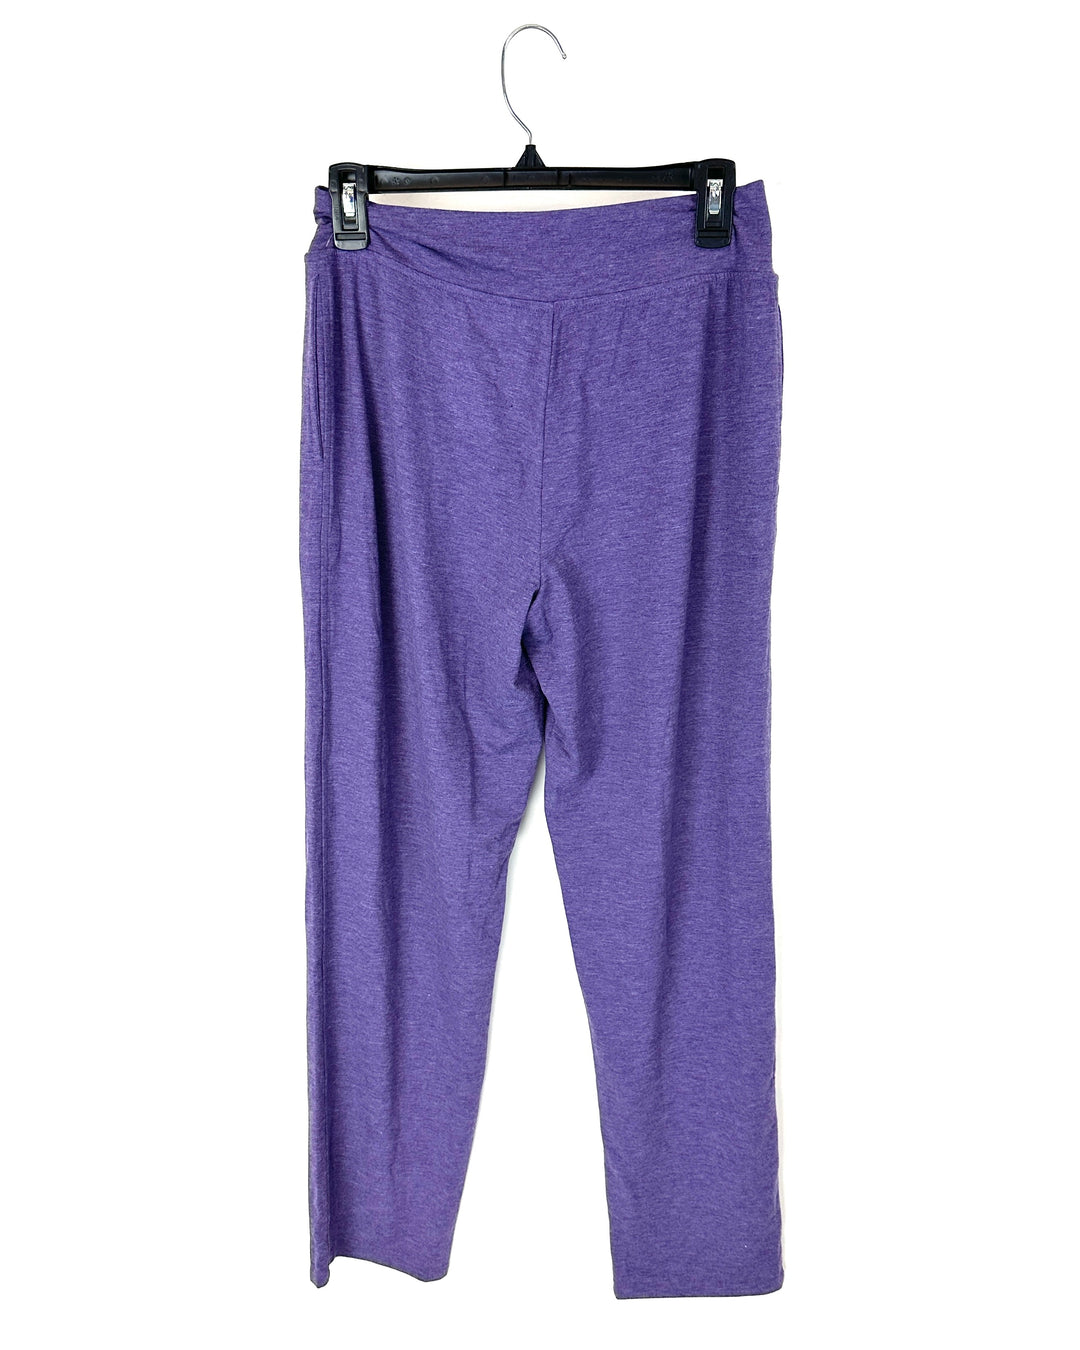 Purple Pants - Small